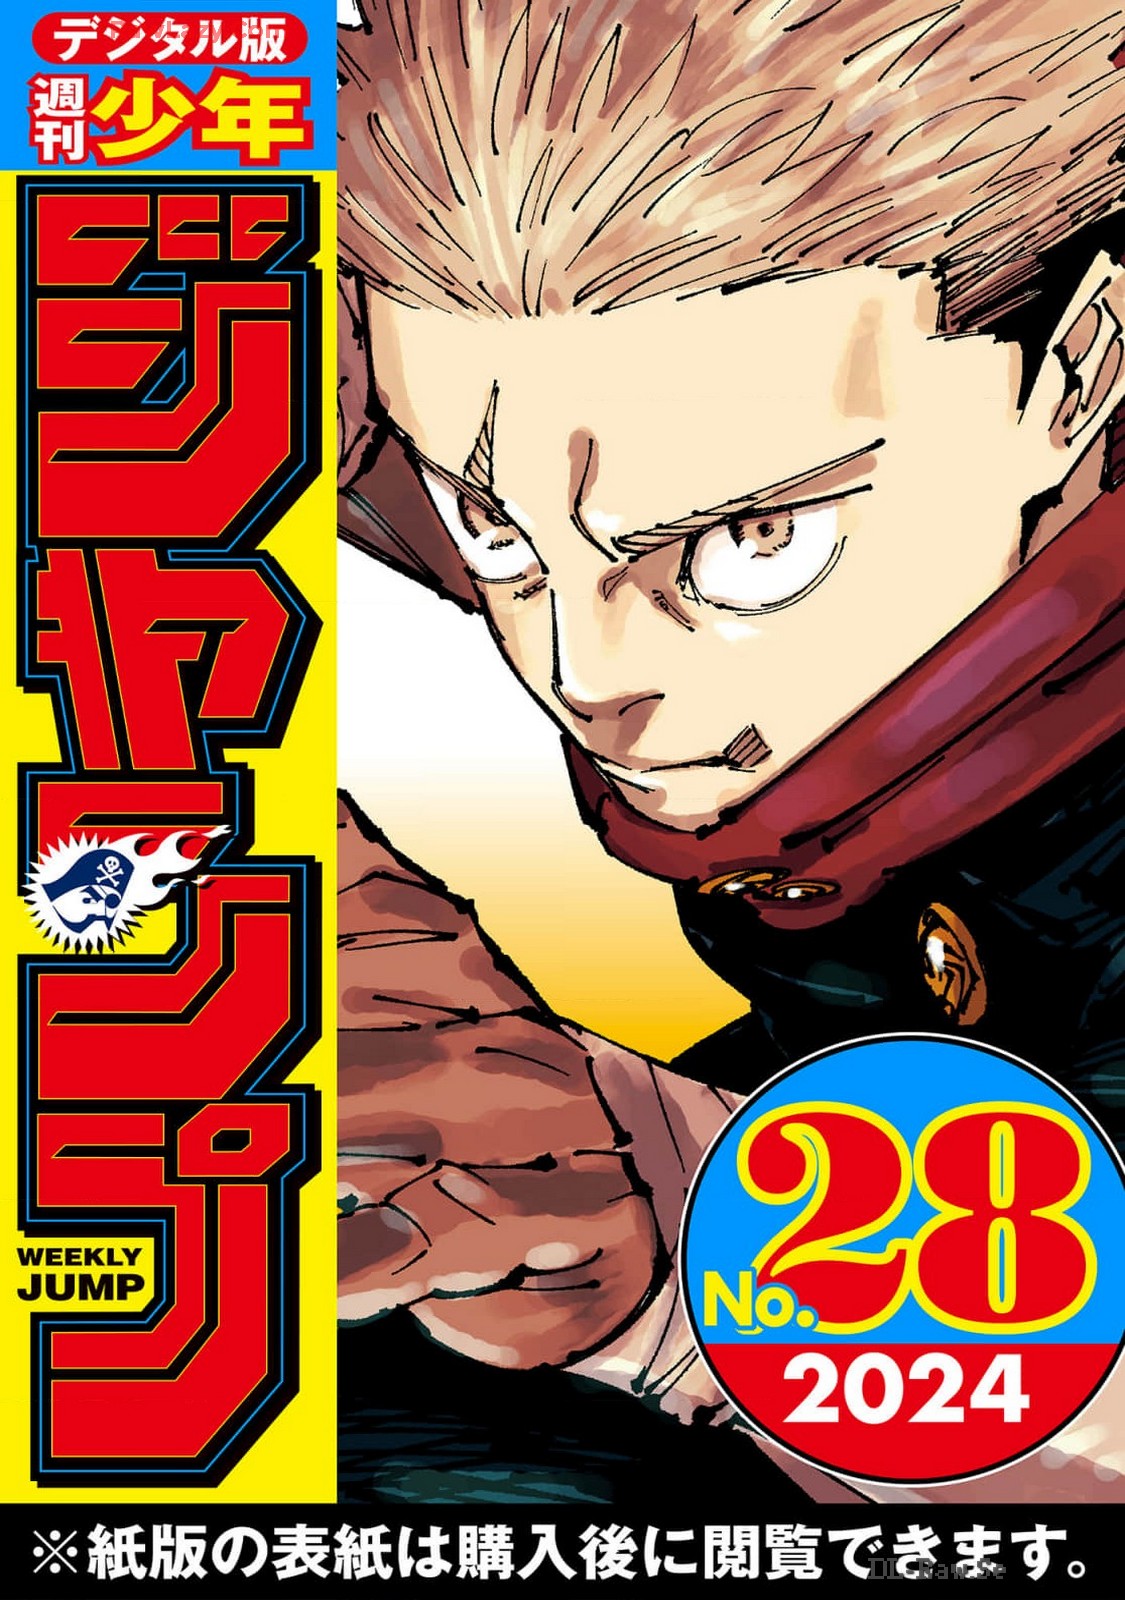 The thumbnail of 週刊少年ジャンプ 2024 年01-28号